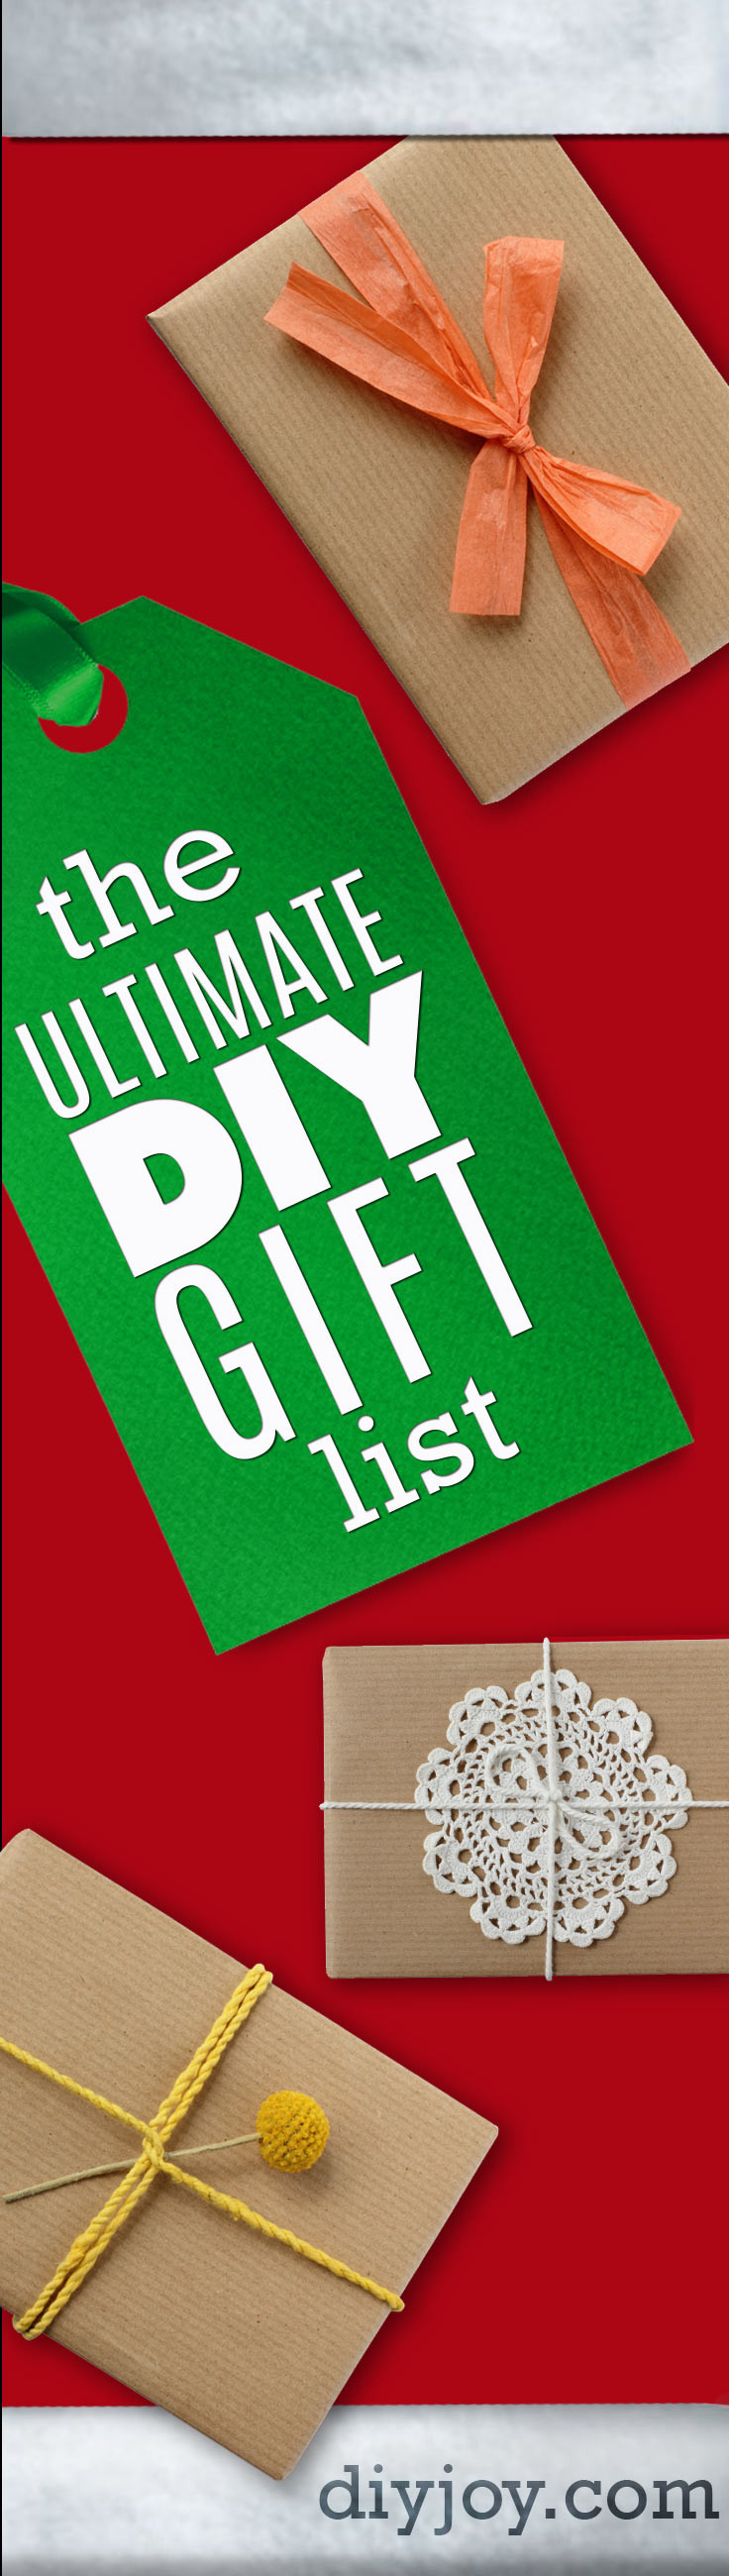 DIY Christmas Gifts Pinterest
 The Ultimate DIY Christmas Gifts list